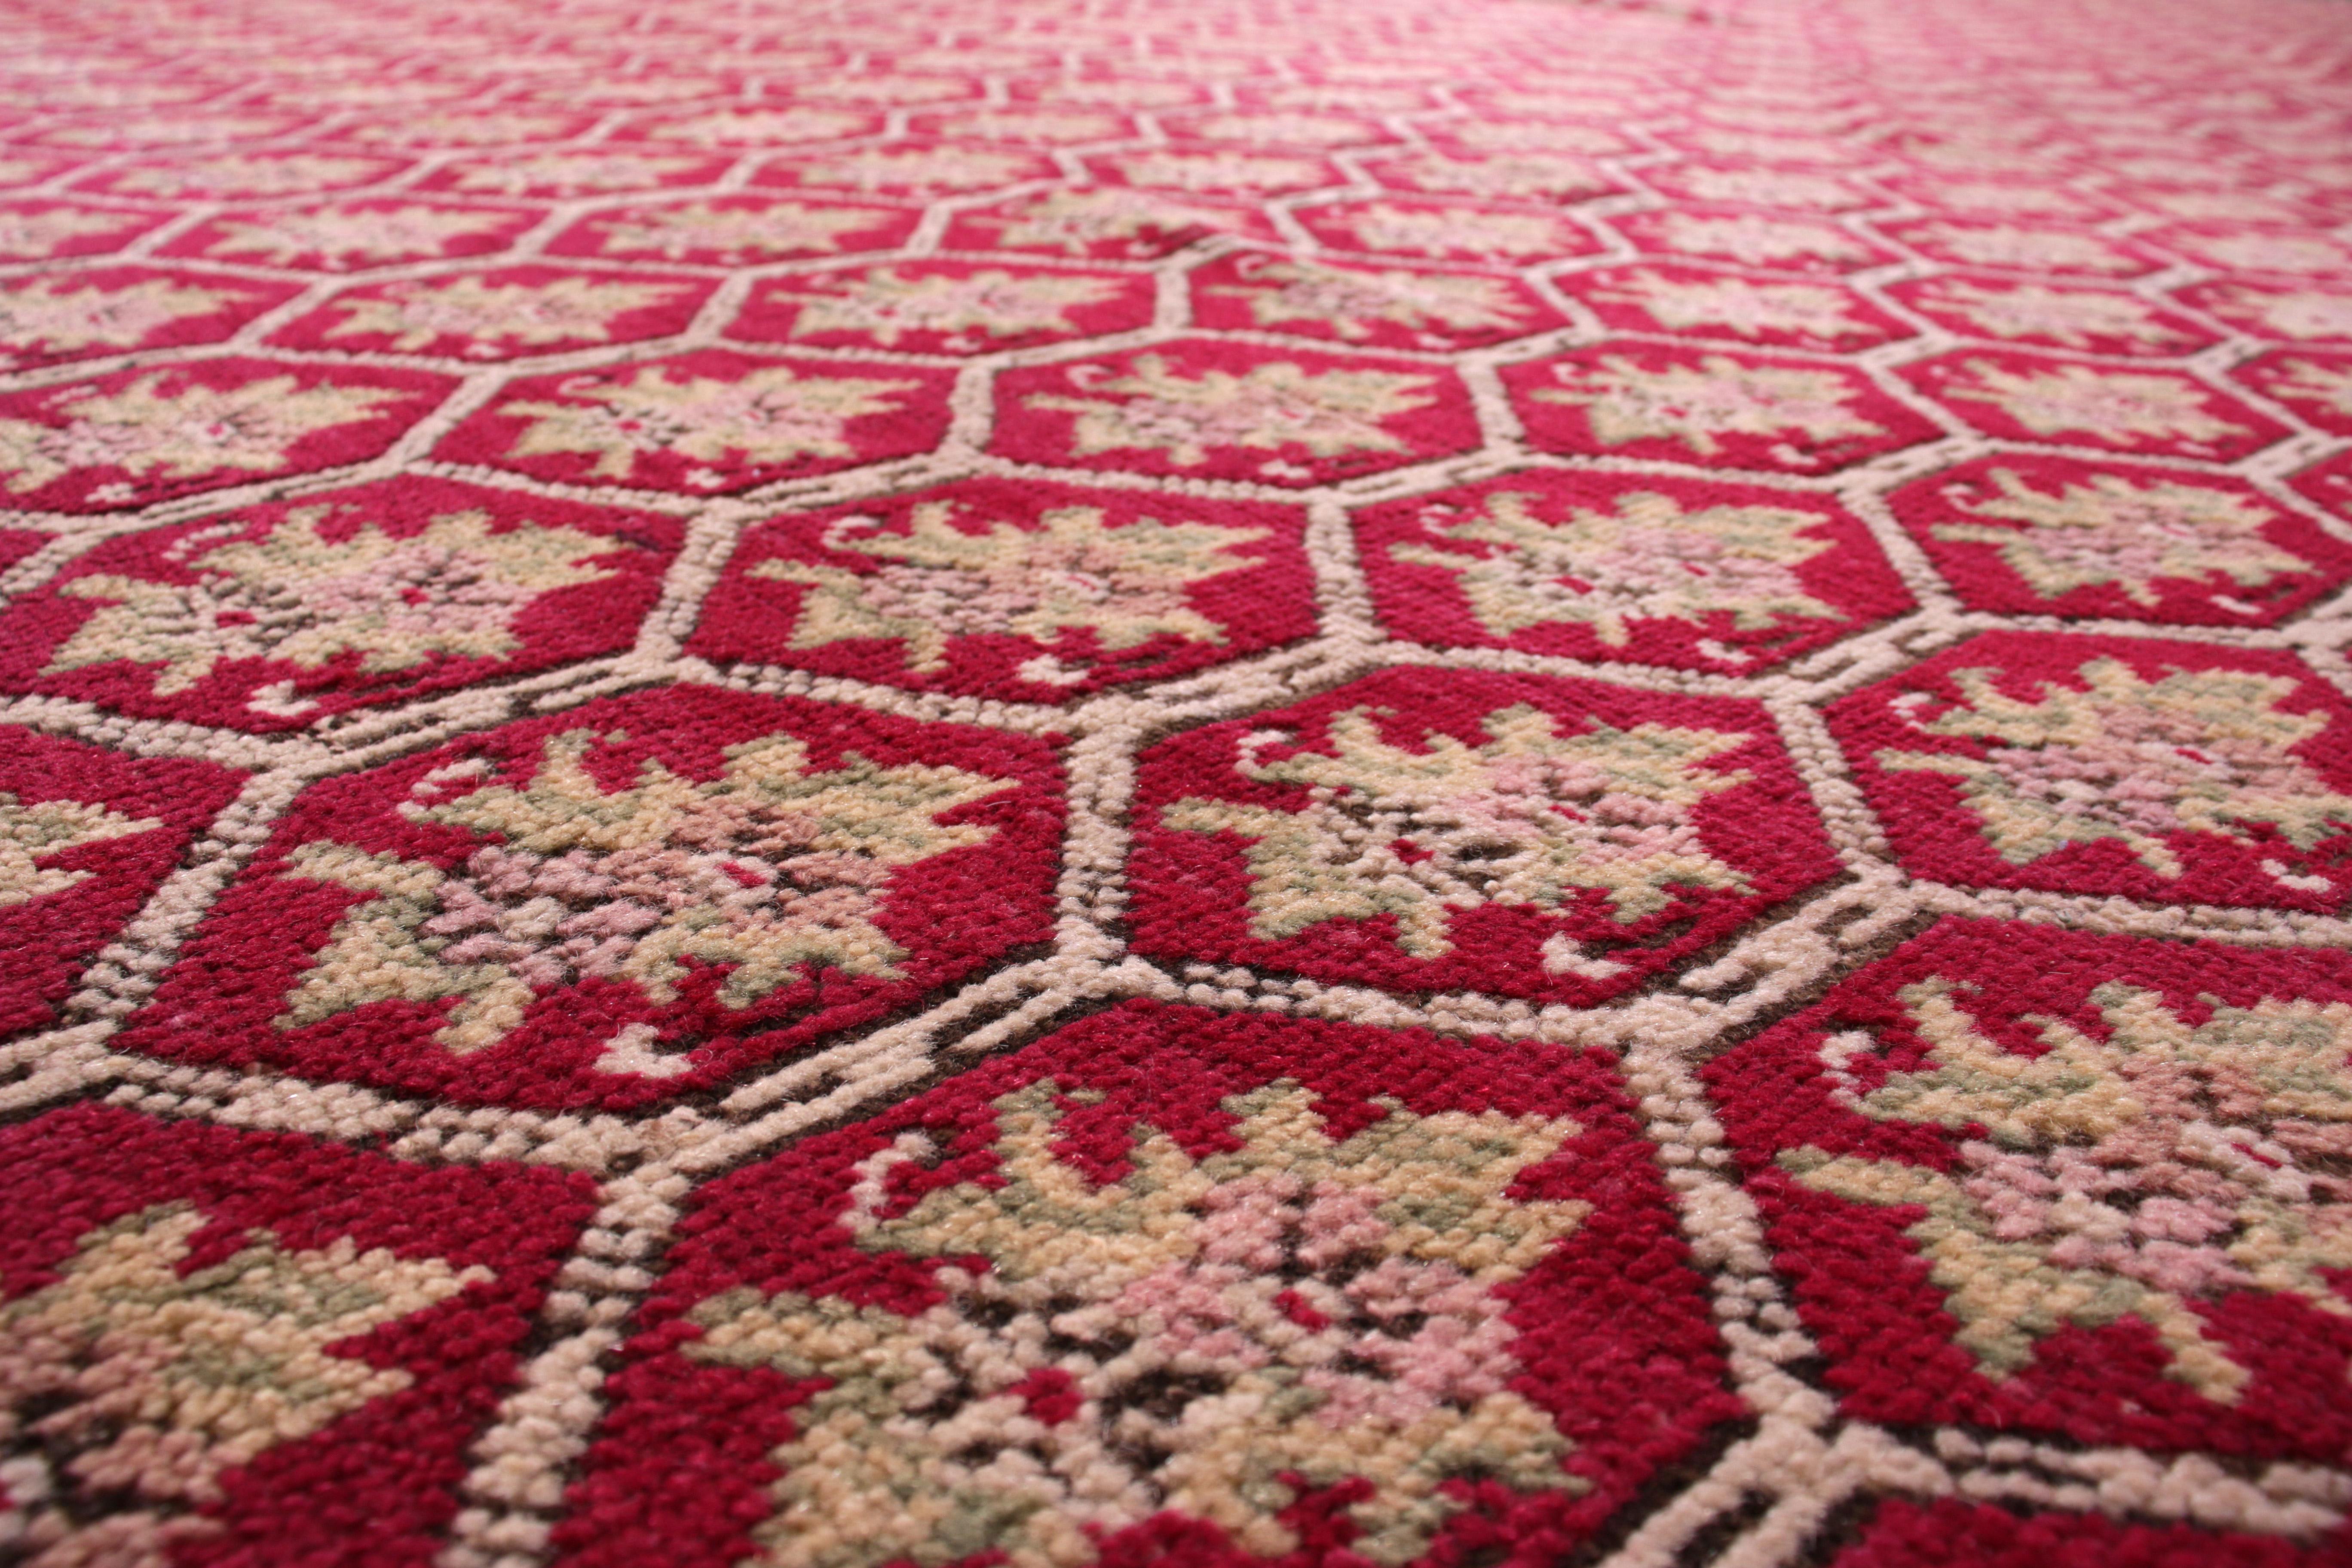 Turkish Antique Floral Rug Red and Pink Transitional Design by Rug & Kilim For Sale